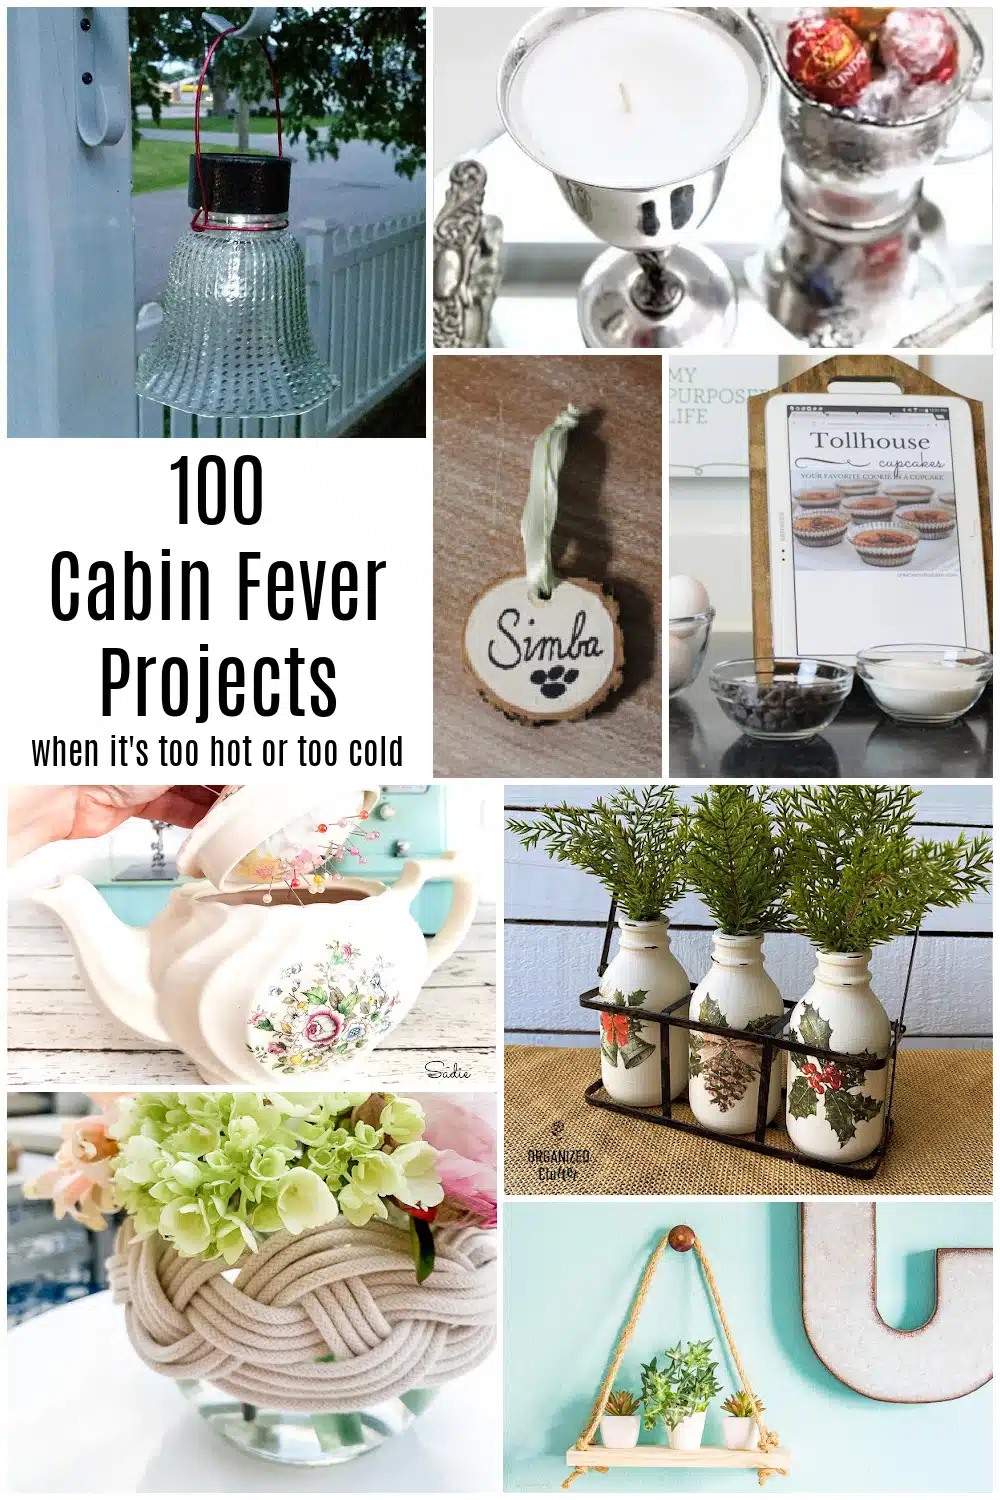 10 Indoor Kids' Crafts and Activities to Tame Cabin Fever